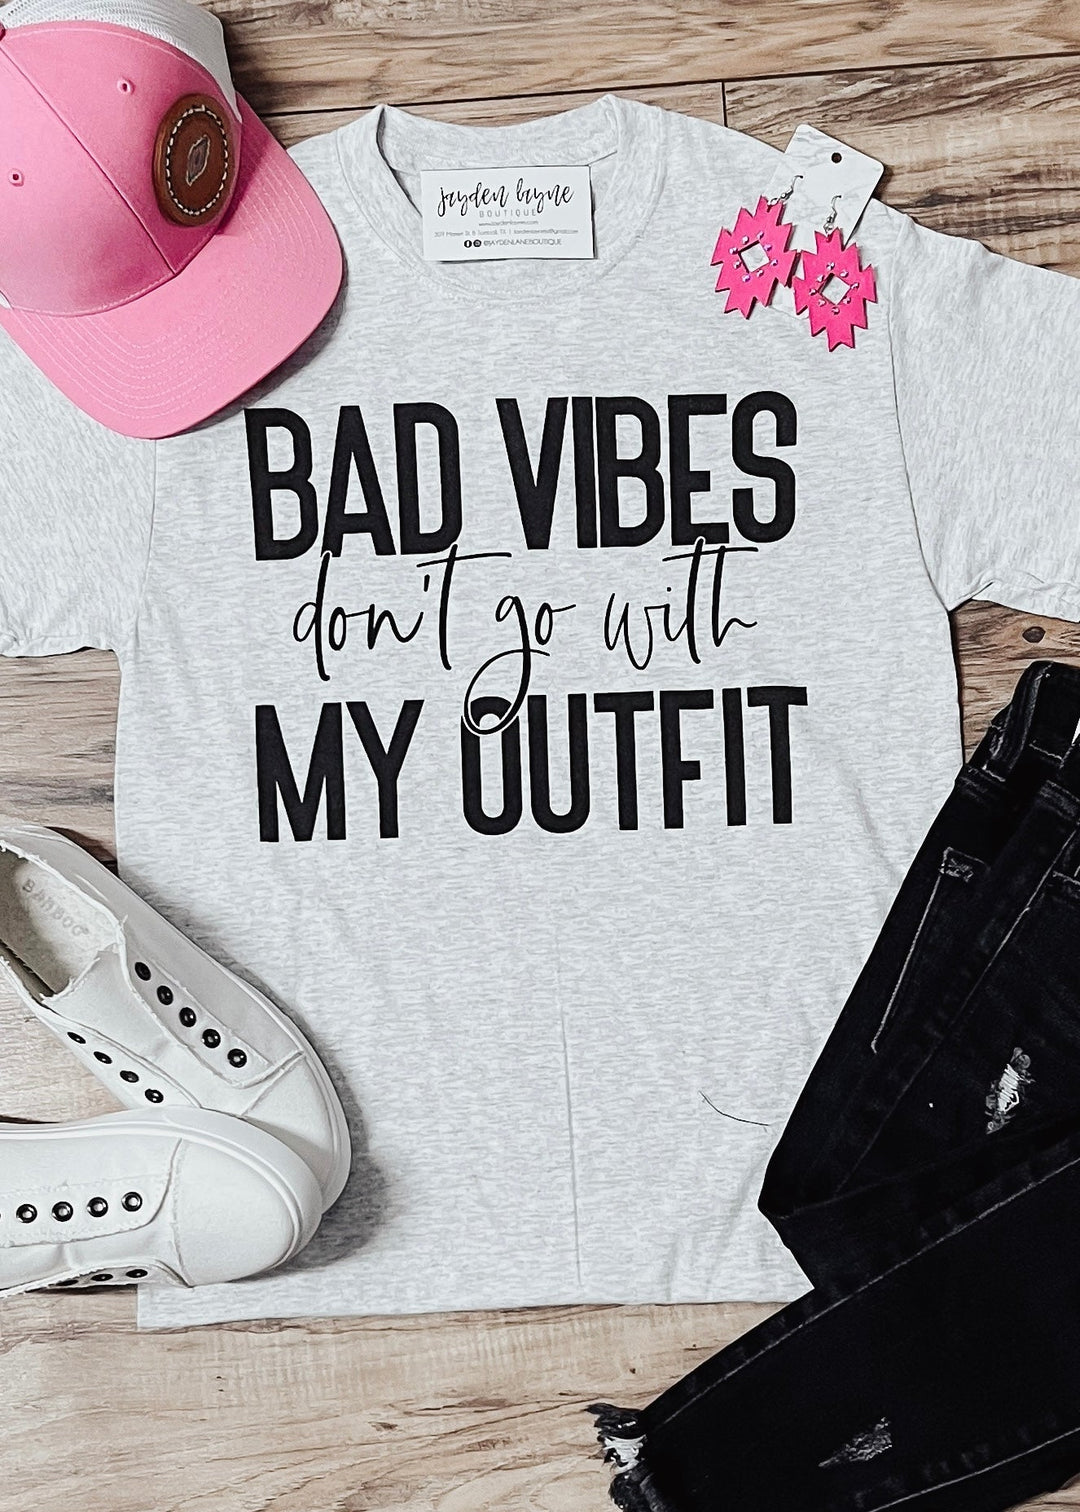 Bad vibes outfit tee - Jayden Layne